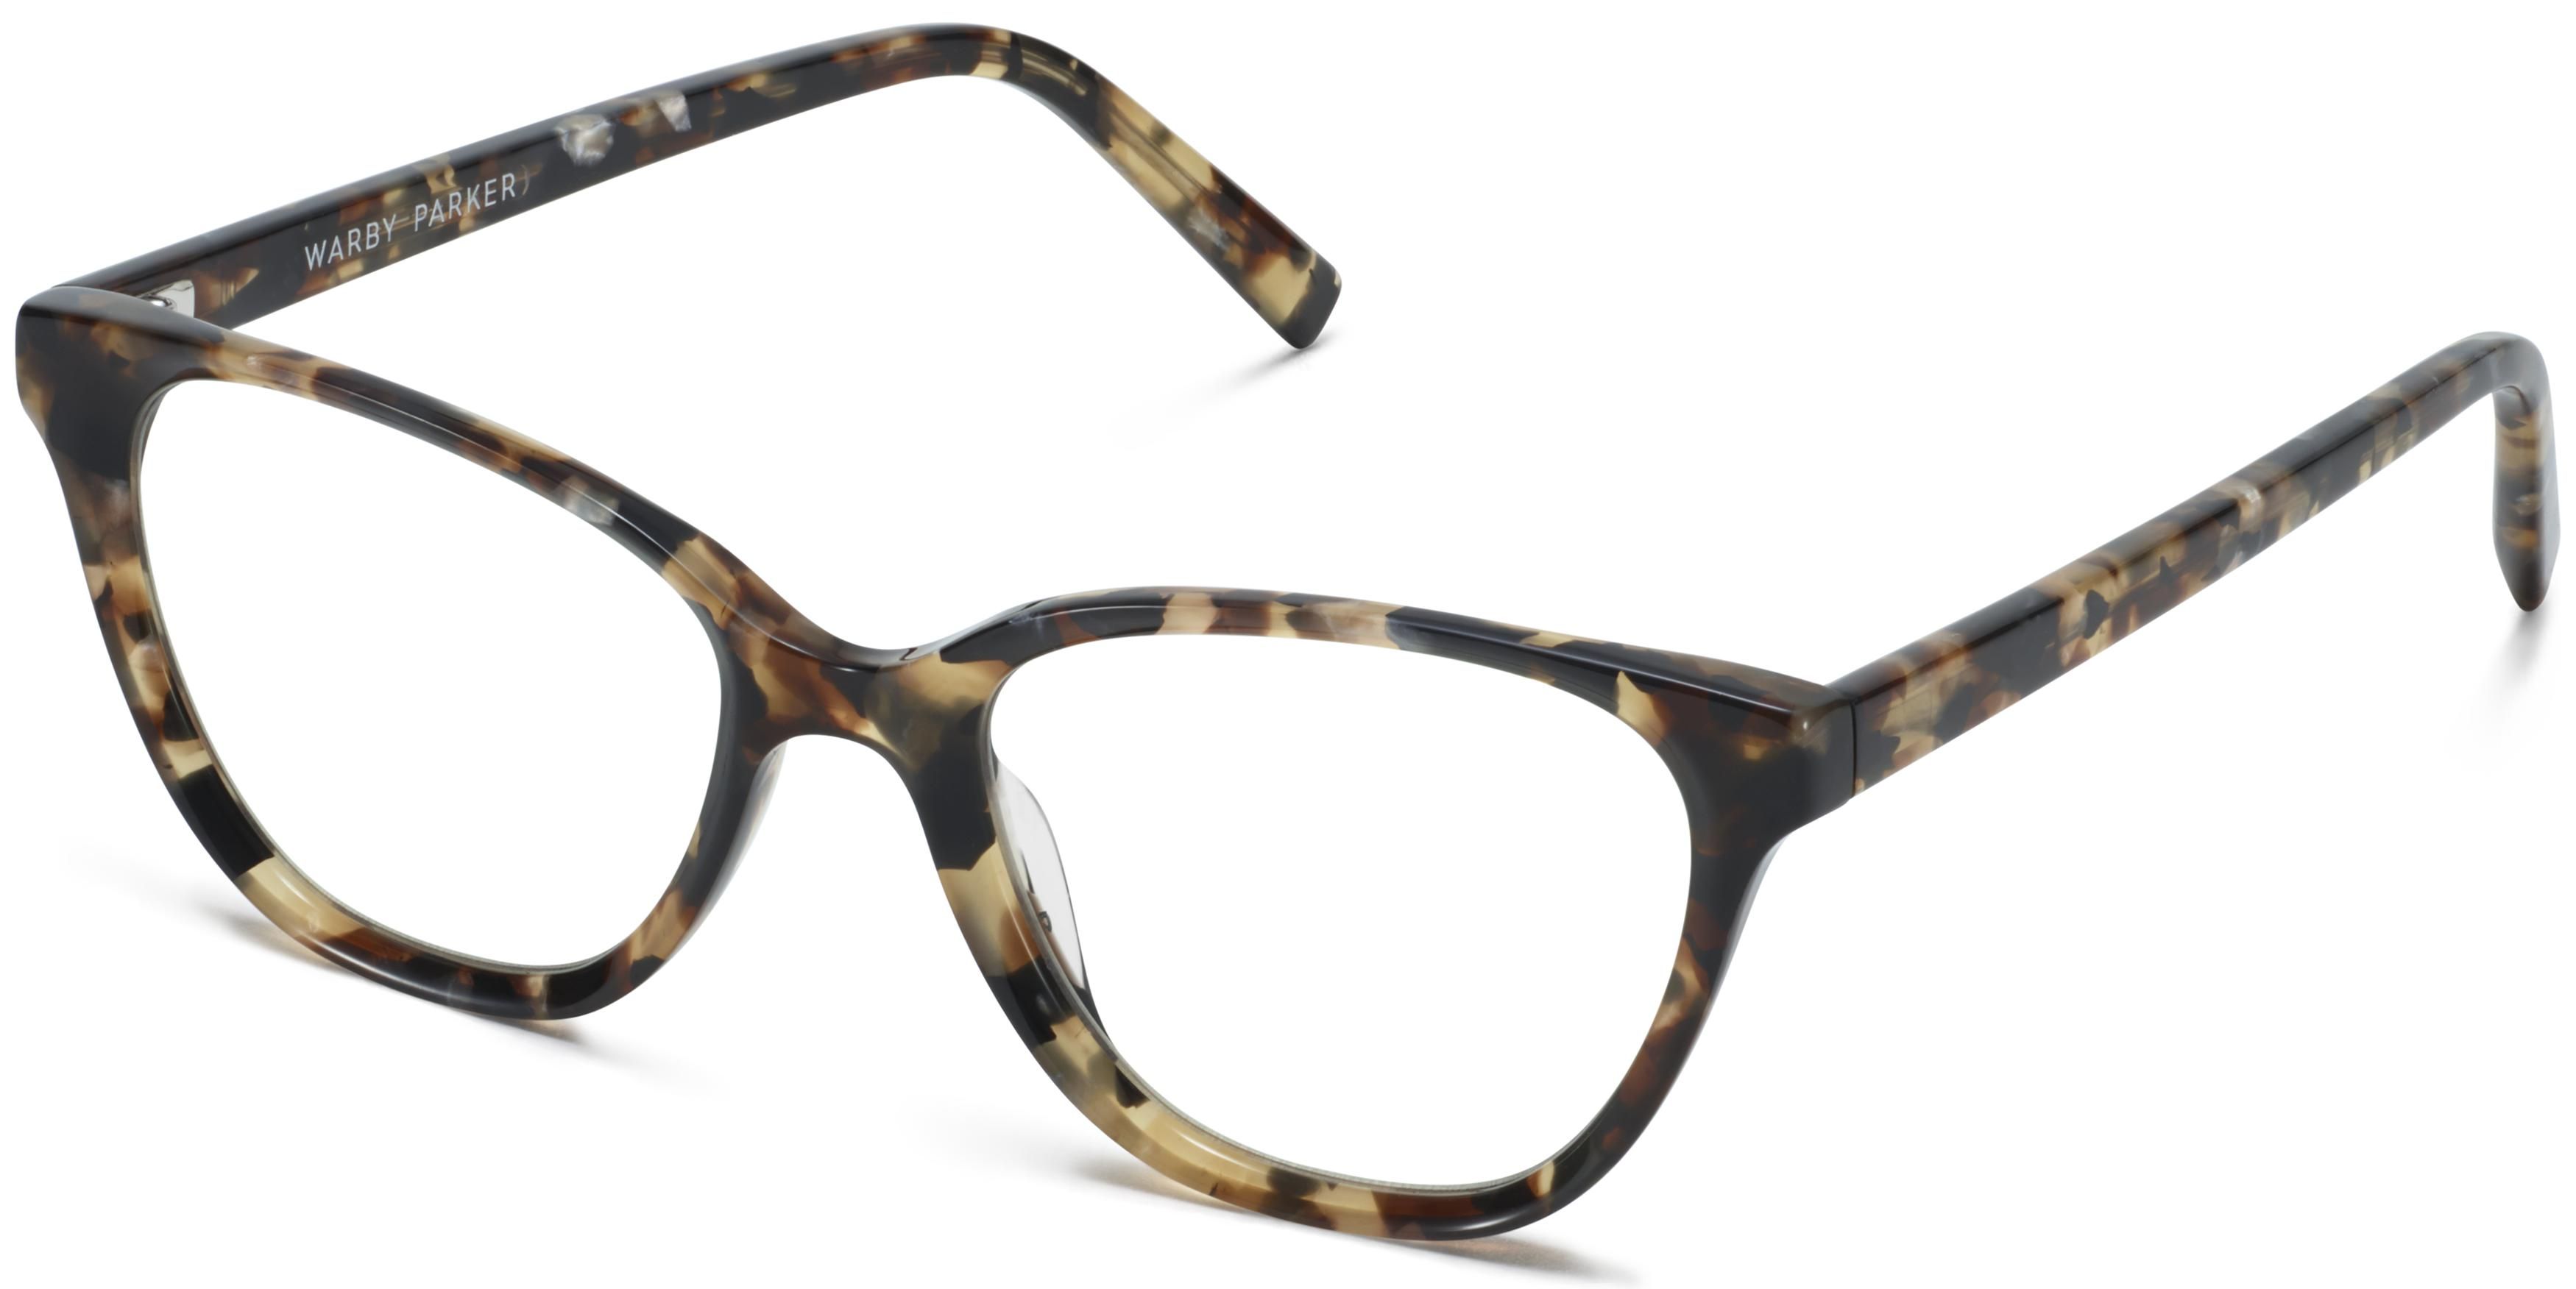 Corretta Eyeglasses in Ecru Tortoise | Warby Parker | Warby Parker (US)